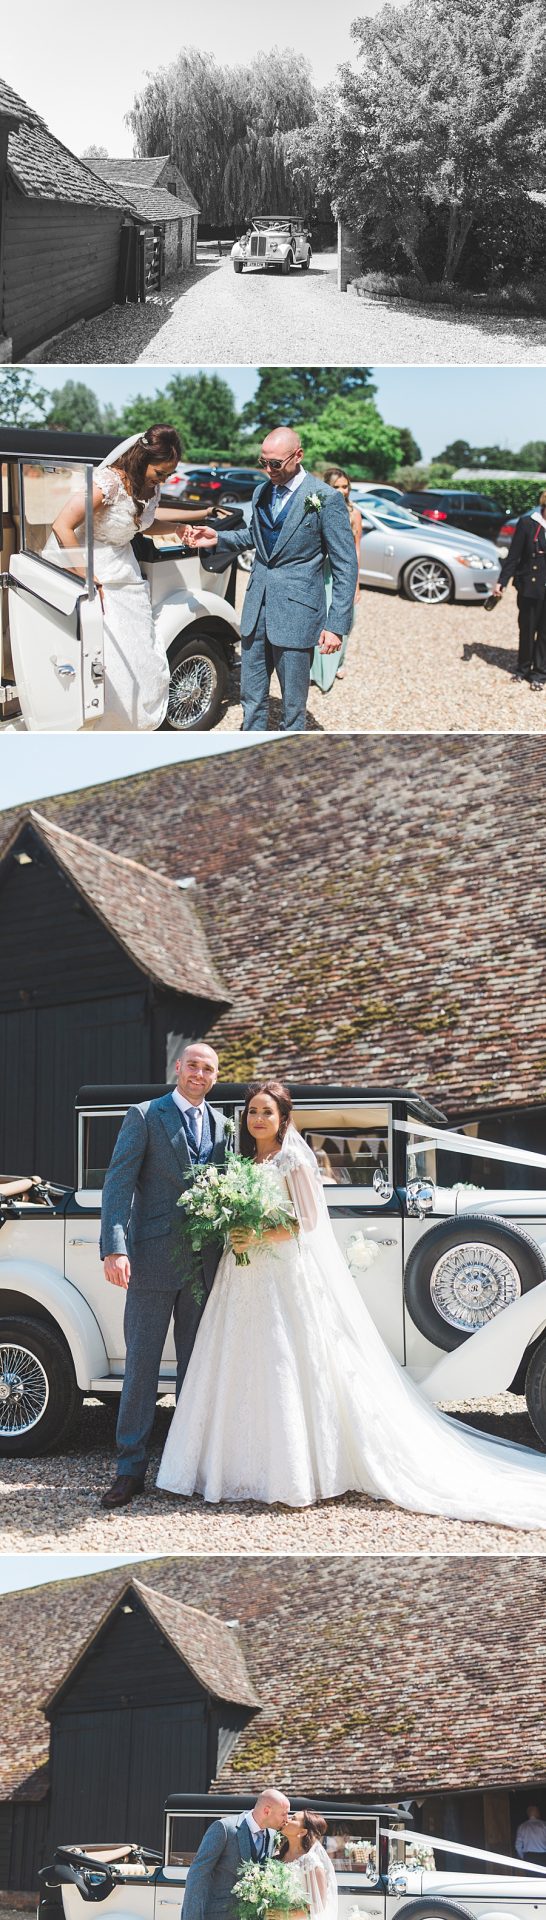 priory barns wedding photograph Natalie and Michael